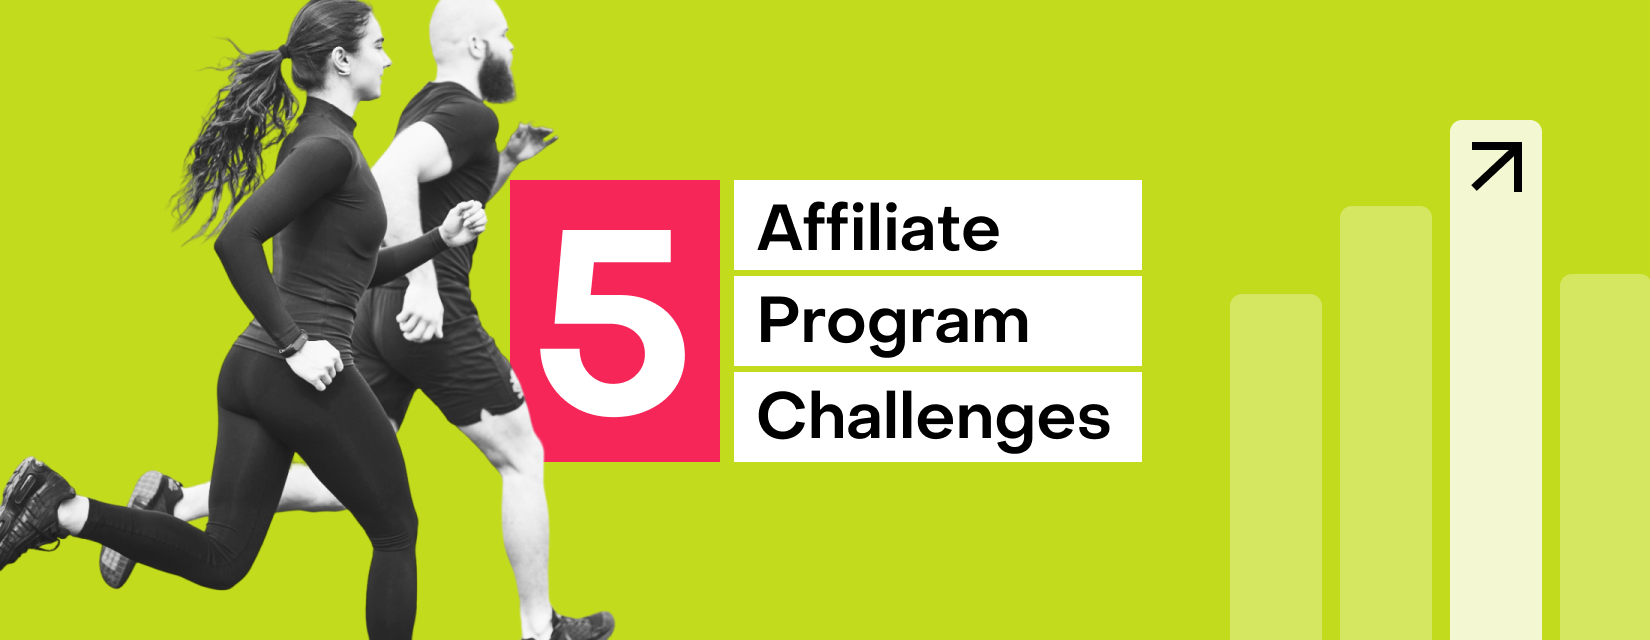 5 Affiliate Program Challenges